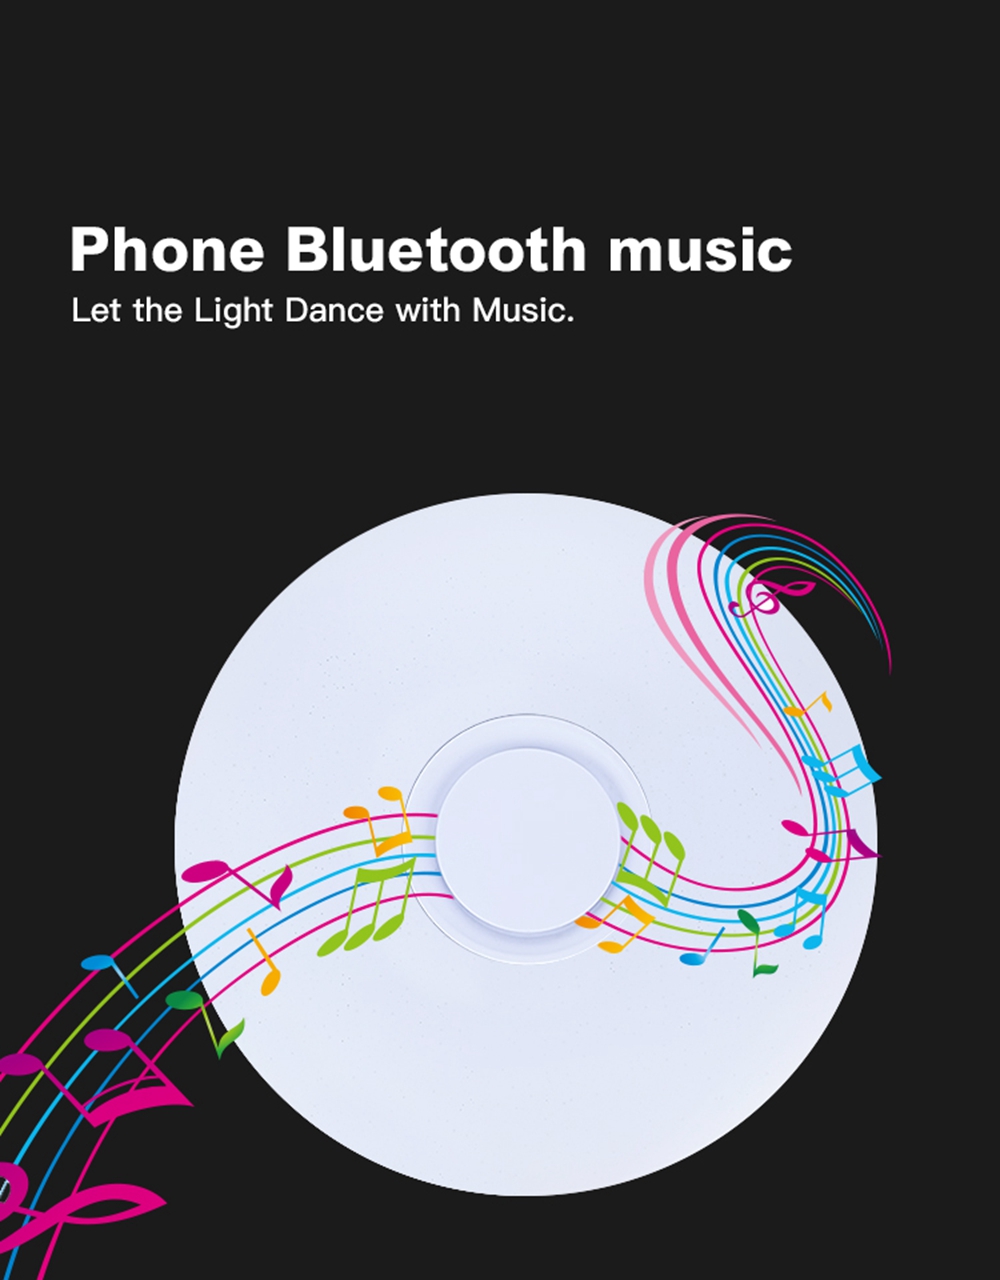 X9903Y - 24W - LY Music Converter Bluetooth Ceiling Light